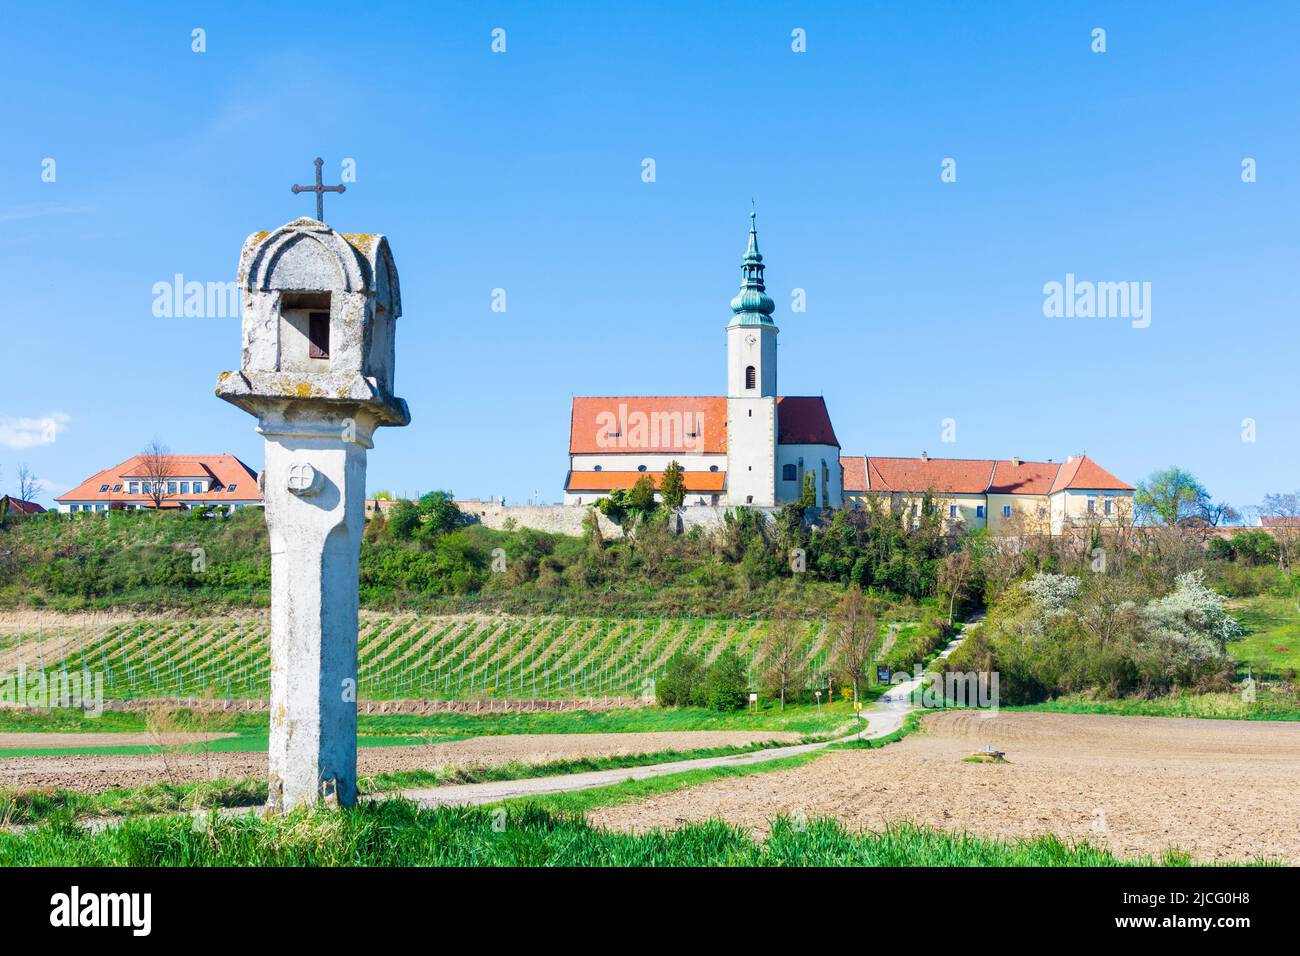 Hausleiten, church Hausleiten, vineyard, Donau region, Lower Austria, Austria Stock Photo